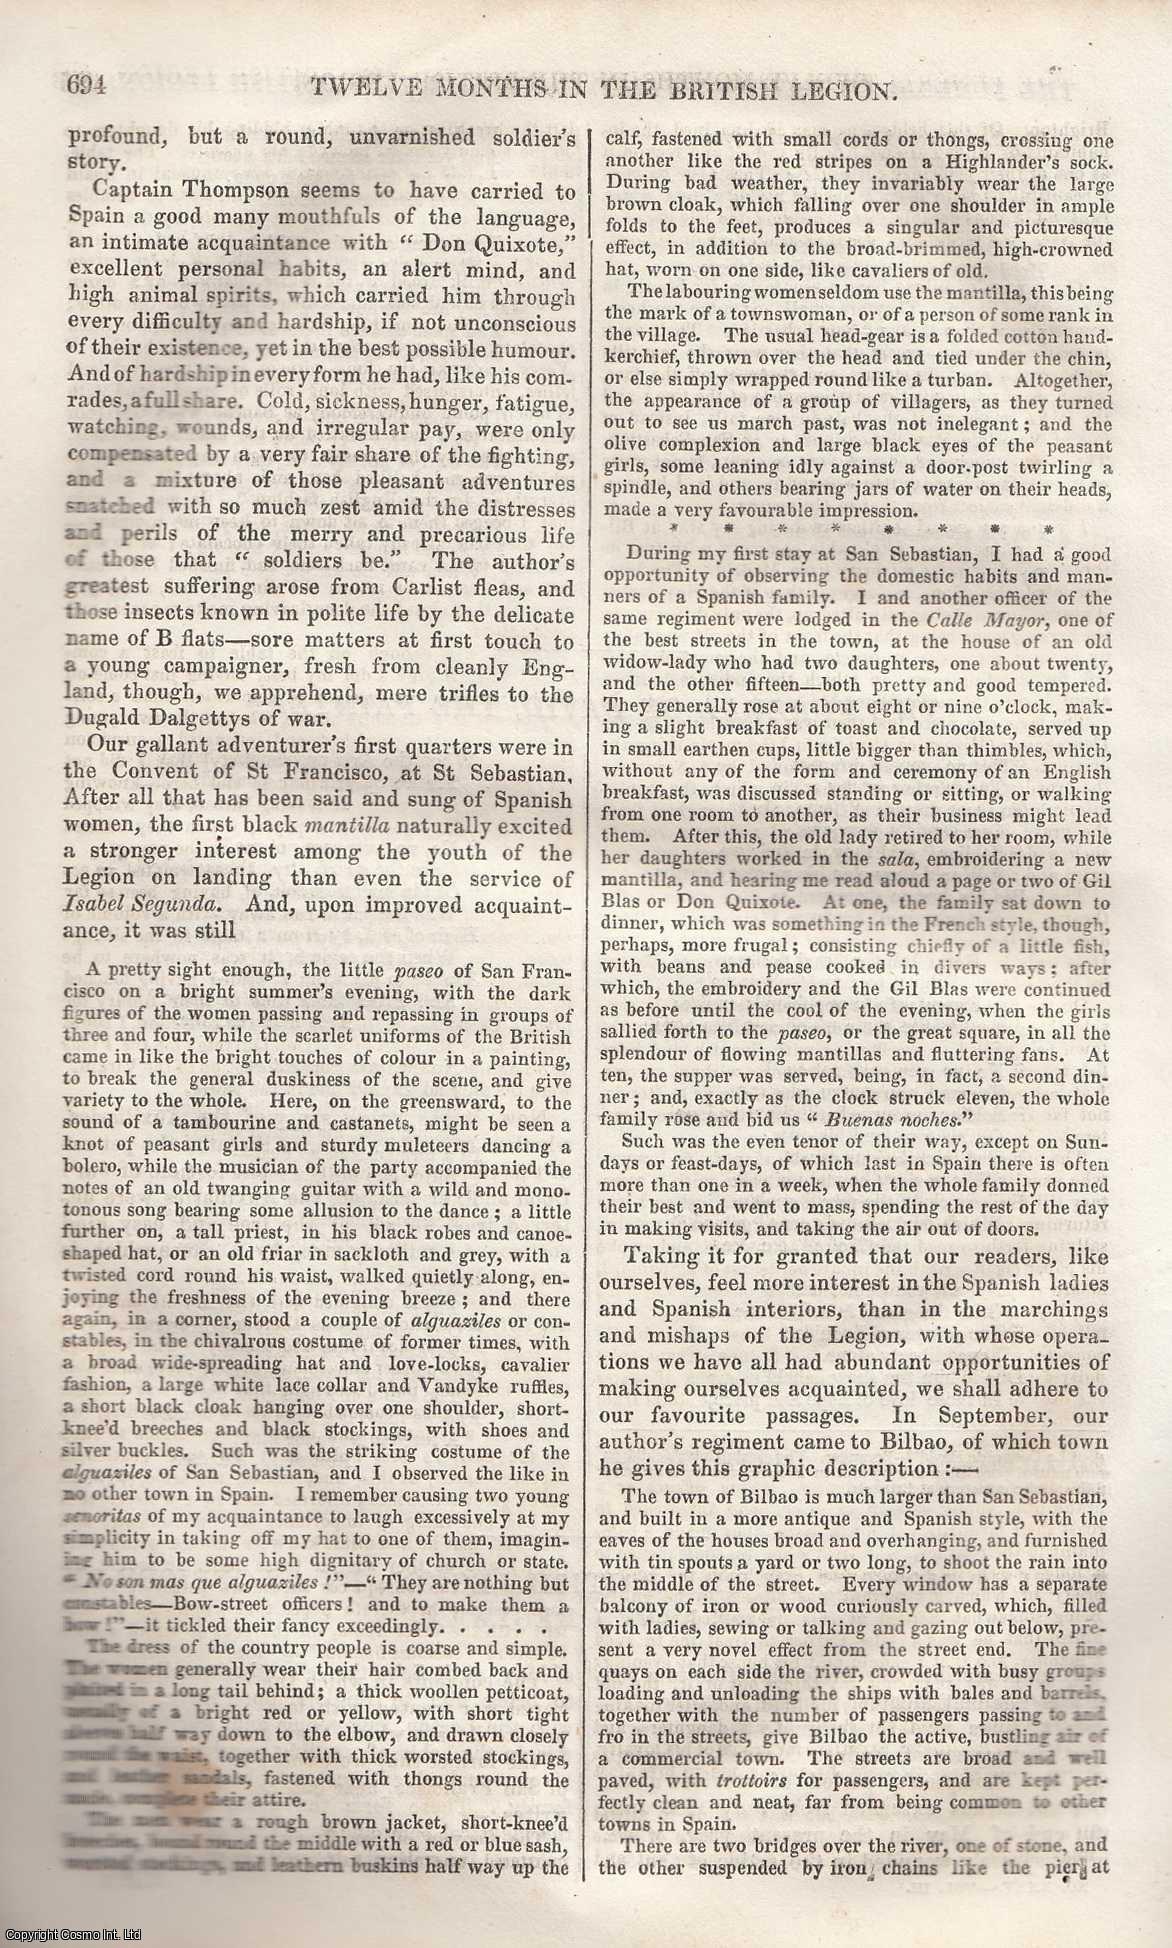 Johnstone, Christian - Twelve Months in The British Legion. An original article from Tait's Edinburgh Magazine, 1836.